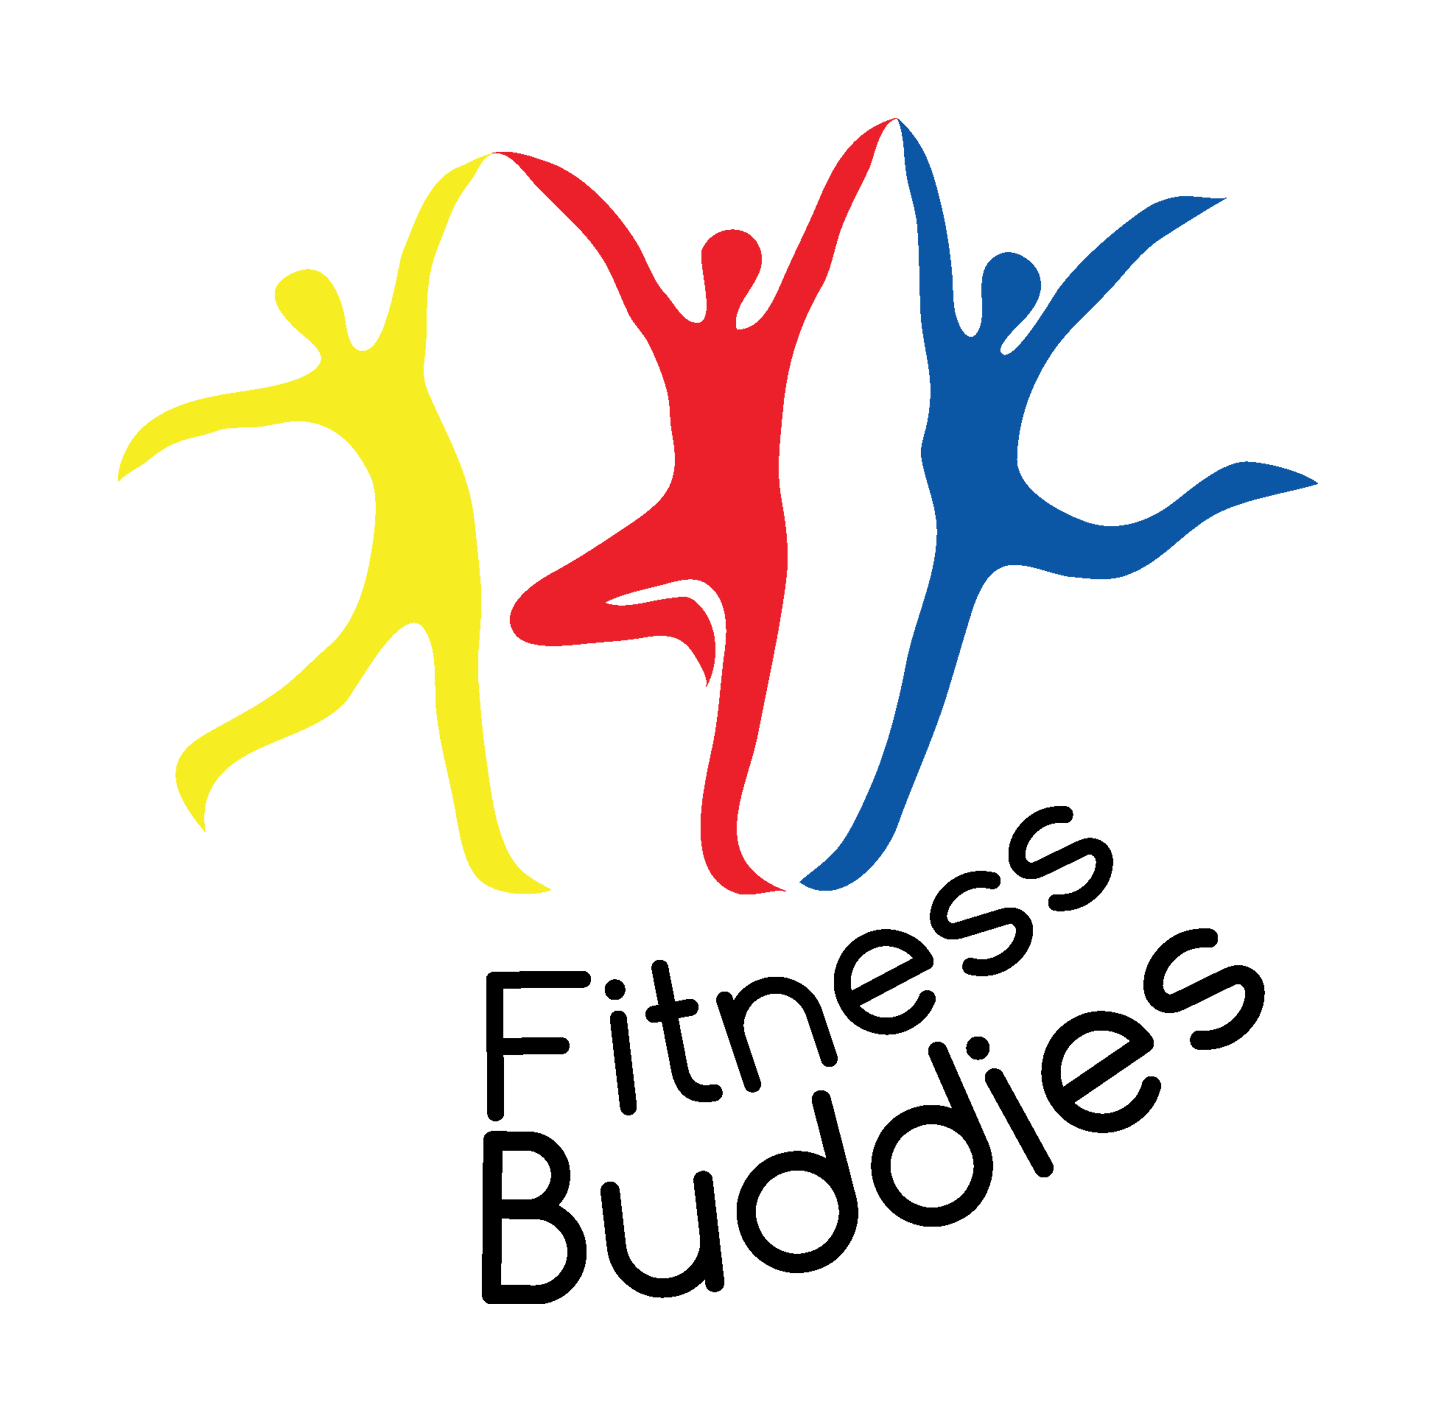 Buddies Logo - Bold, Modern, College Logo Design for Fitness Buddies or FB by Art ...